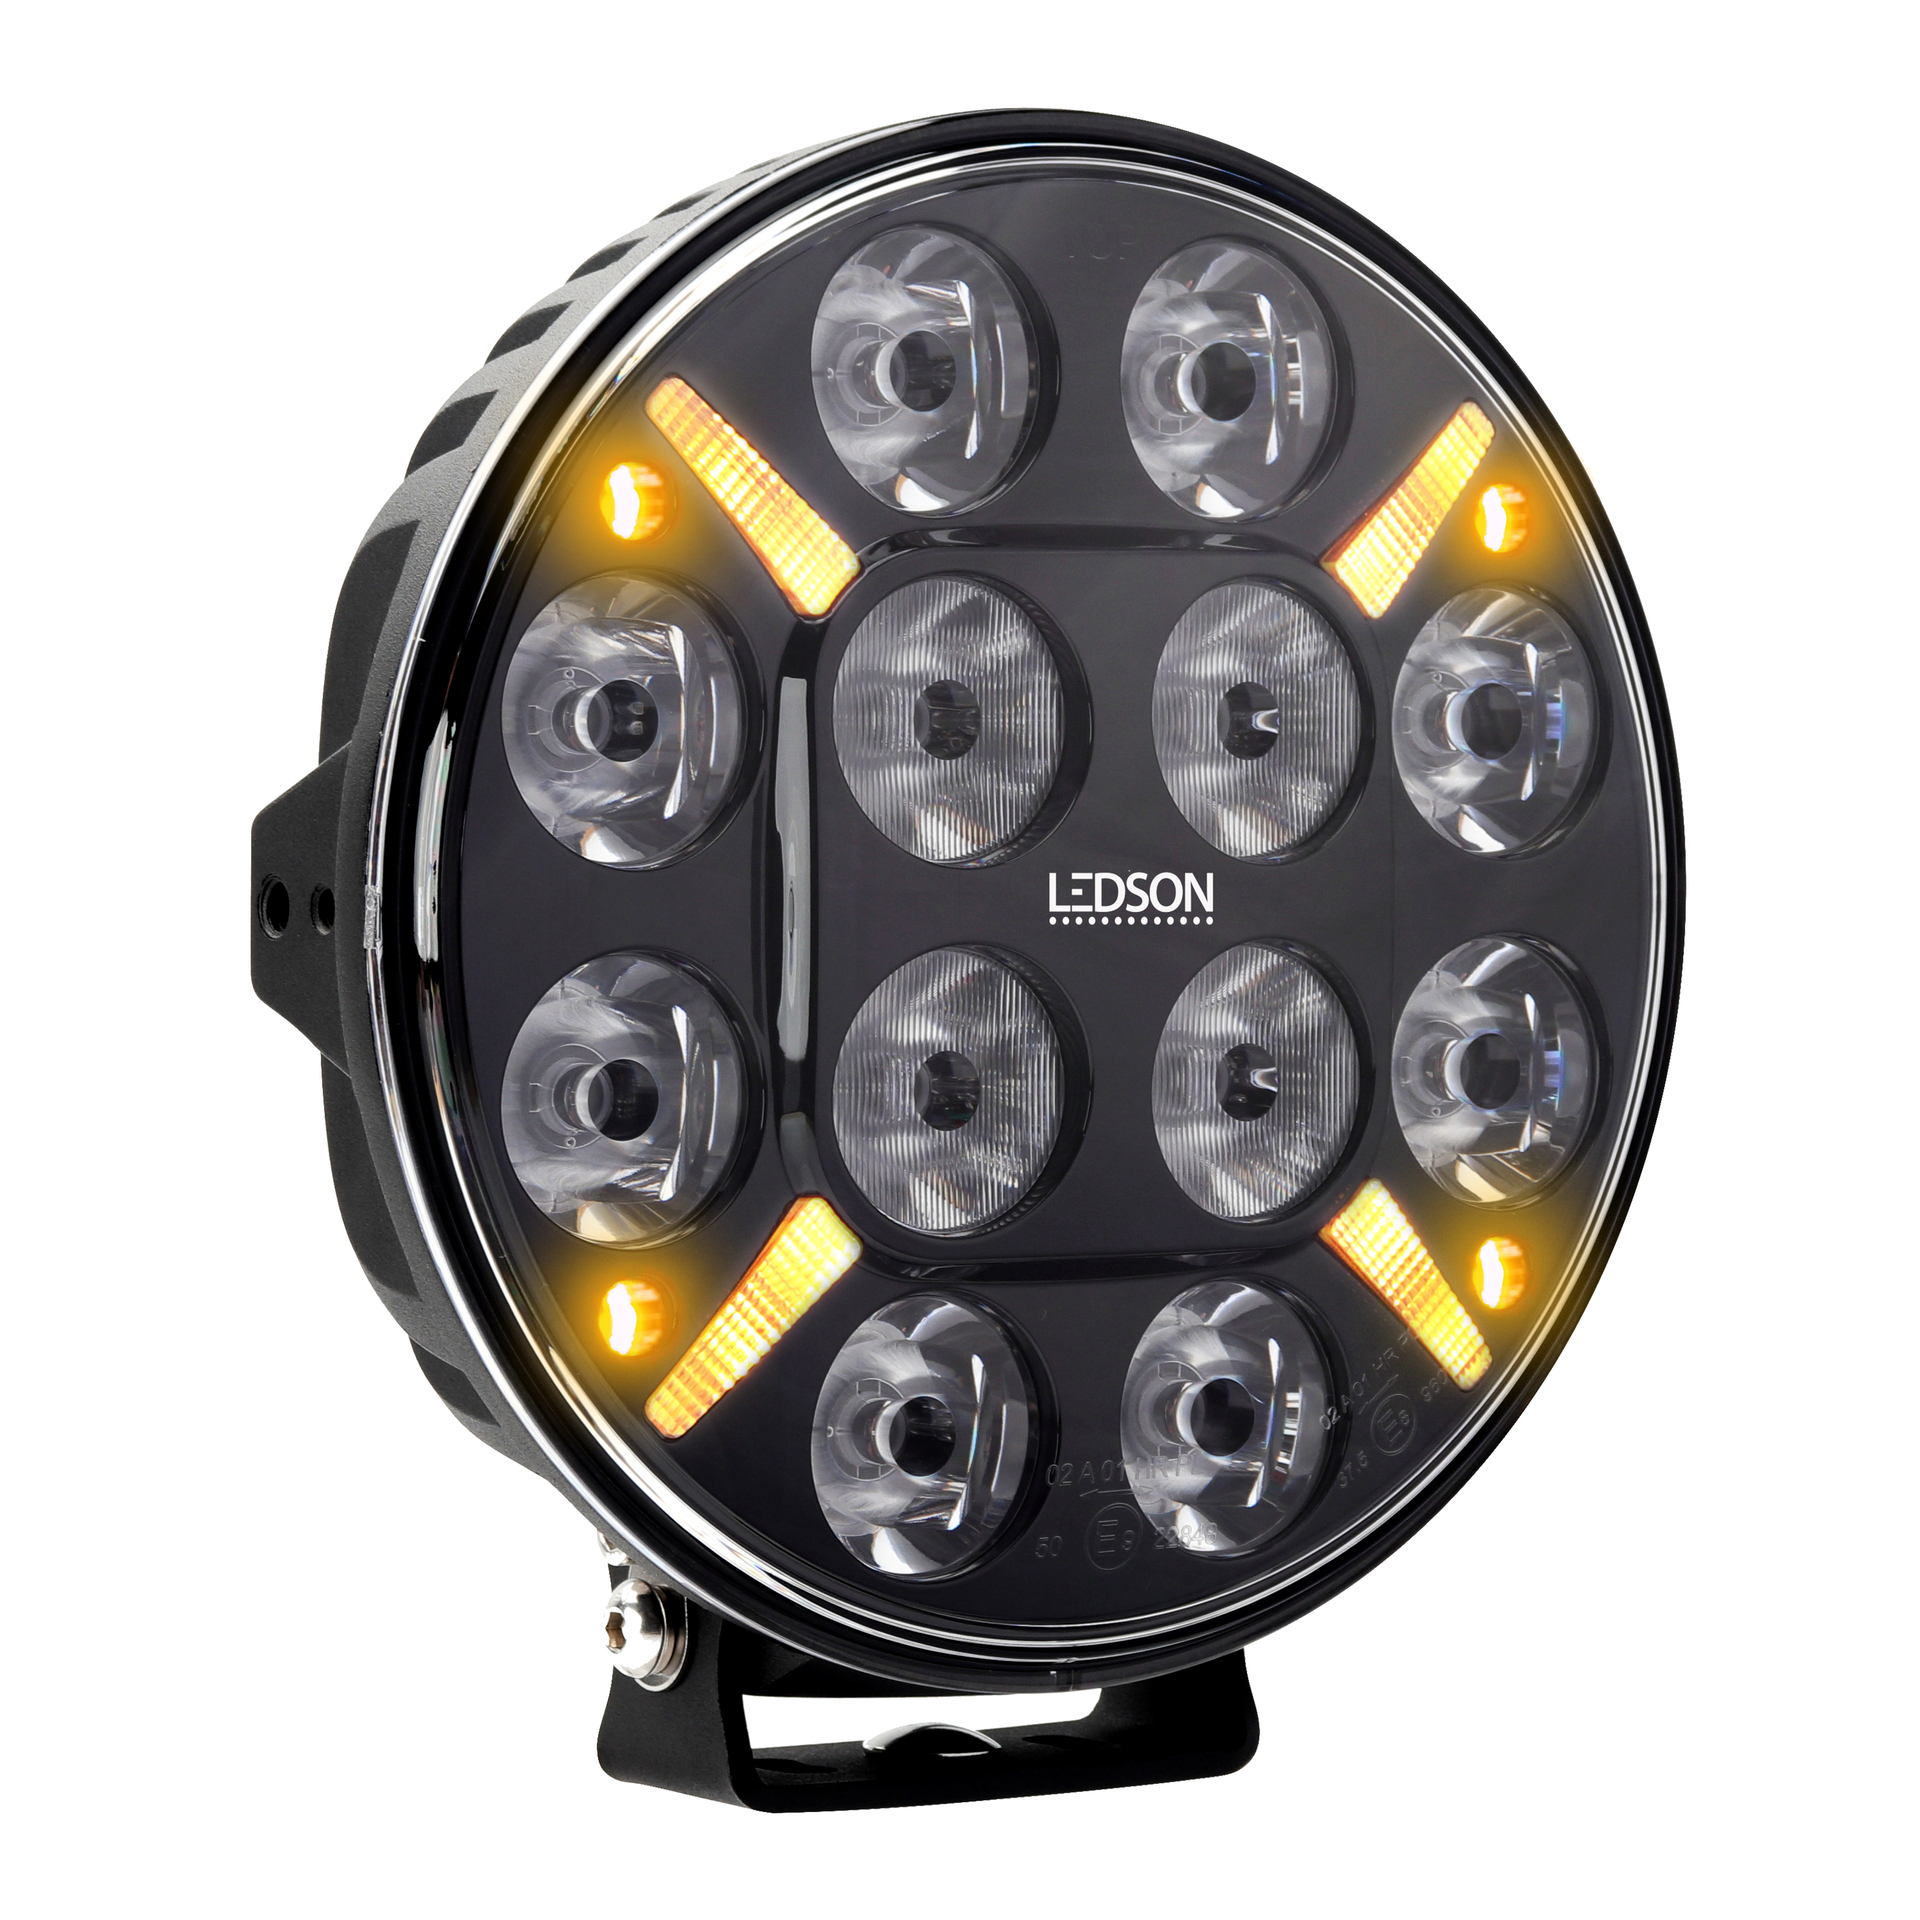 shop - LED-Arbeitsscheinwerfer ; LED-Leuchte ; LED- Scheinwerfer